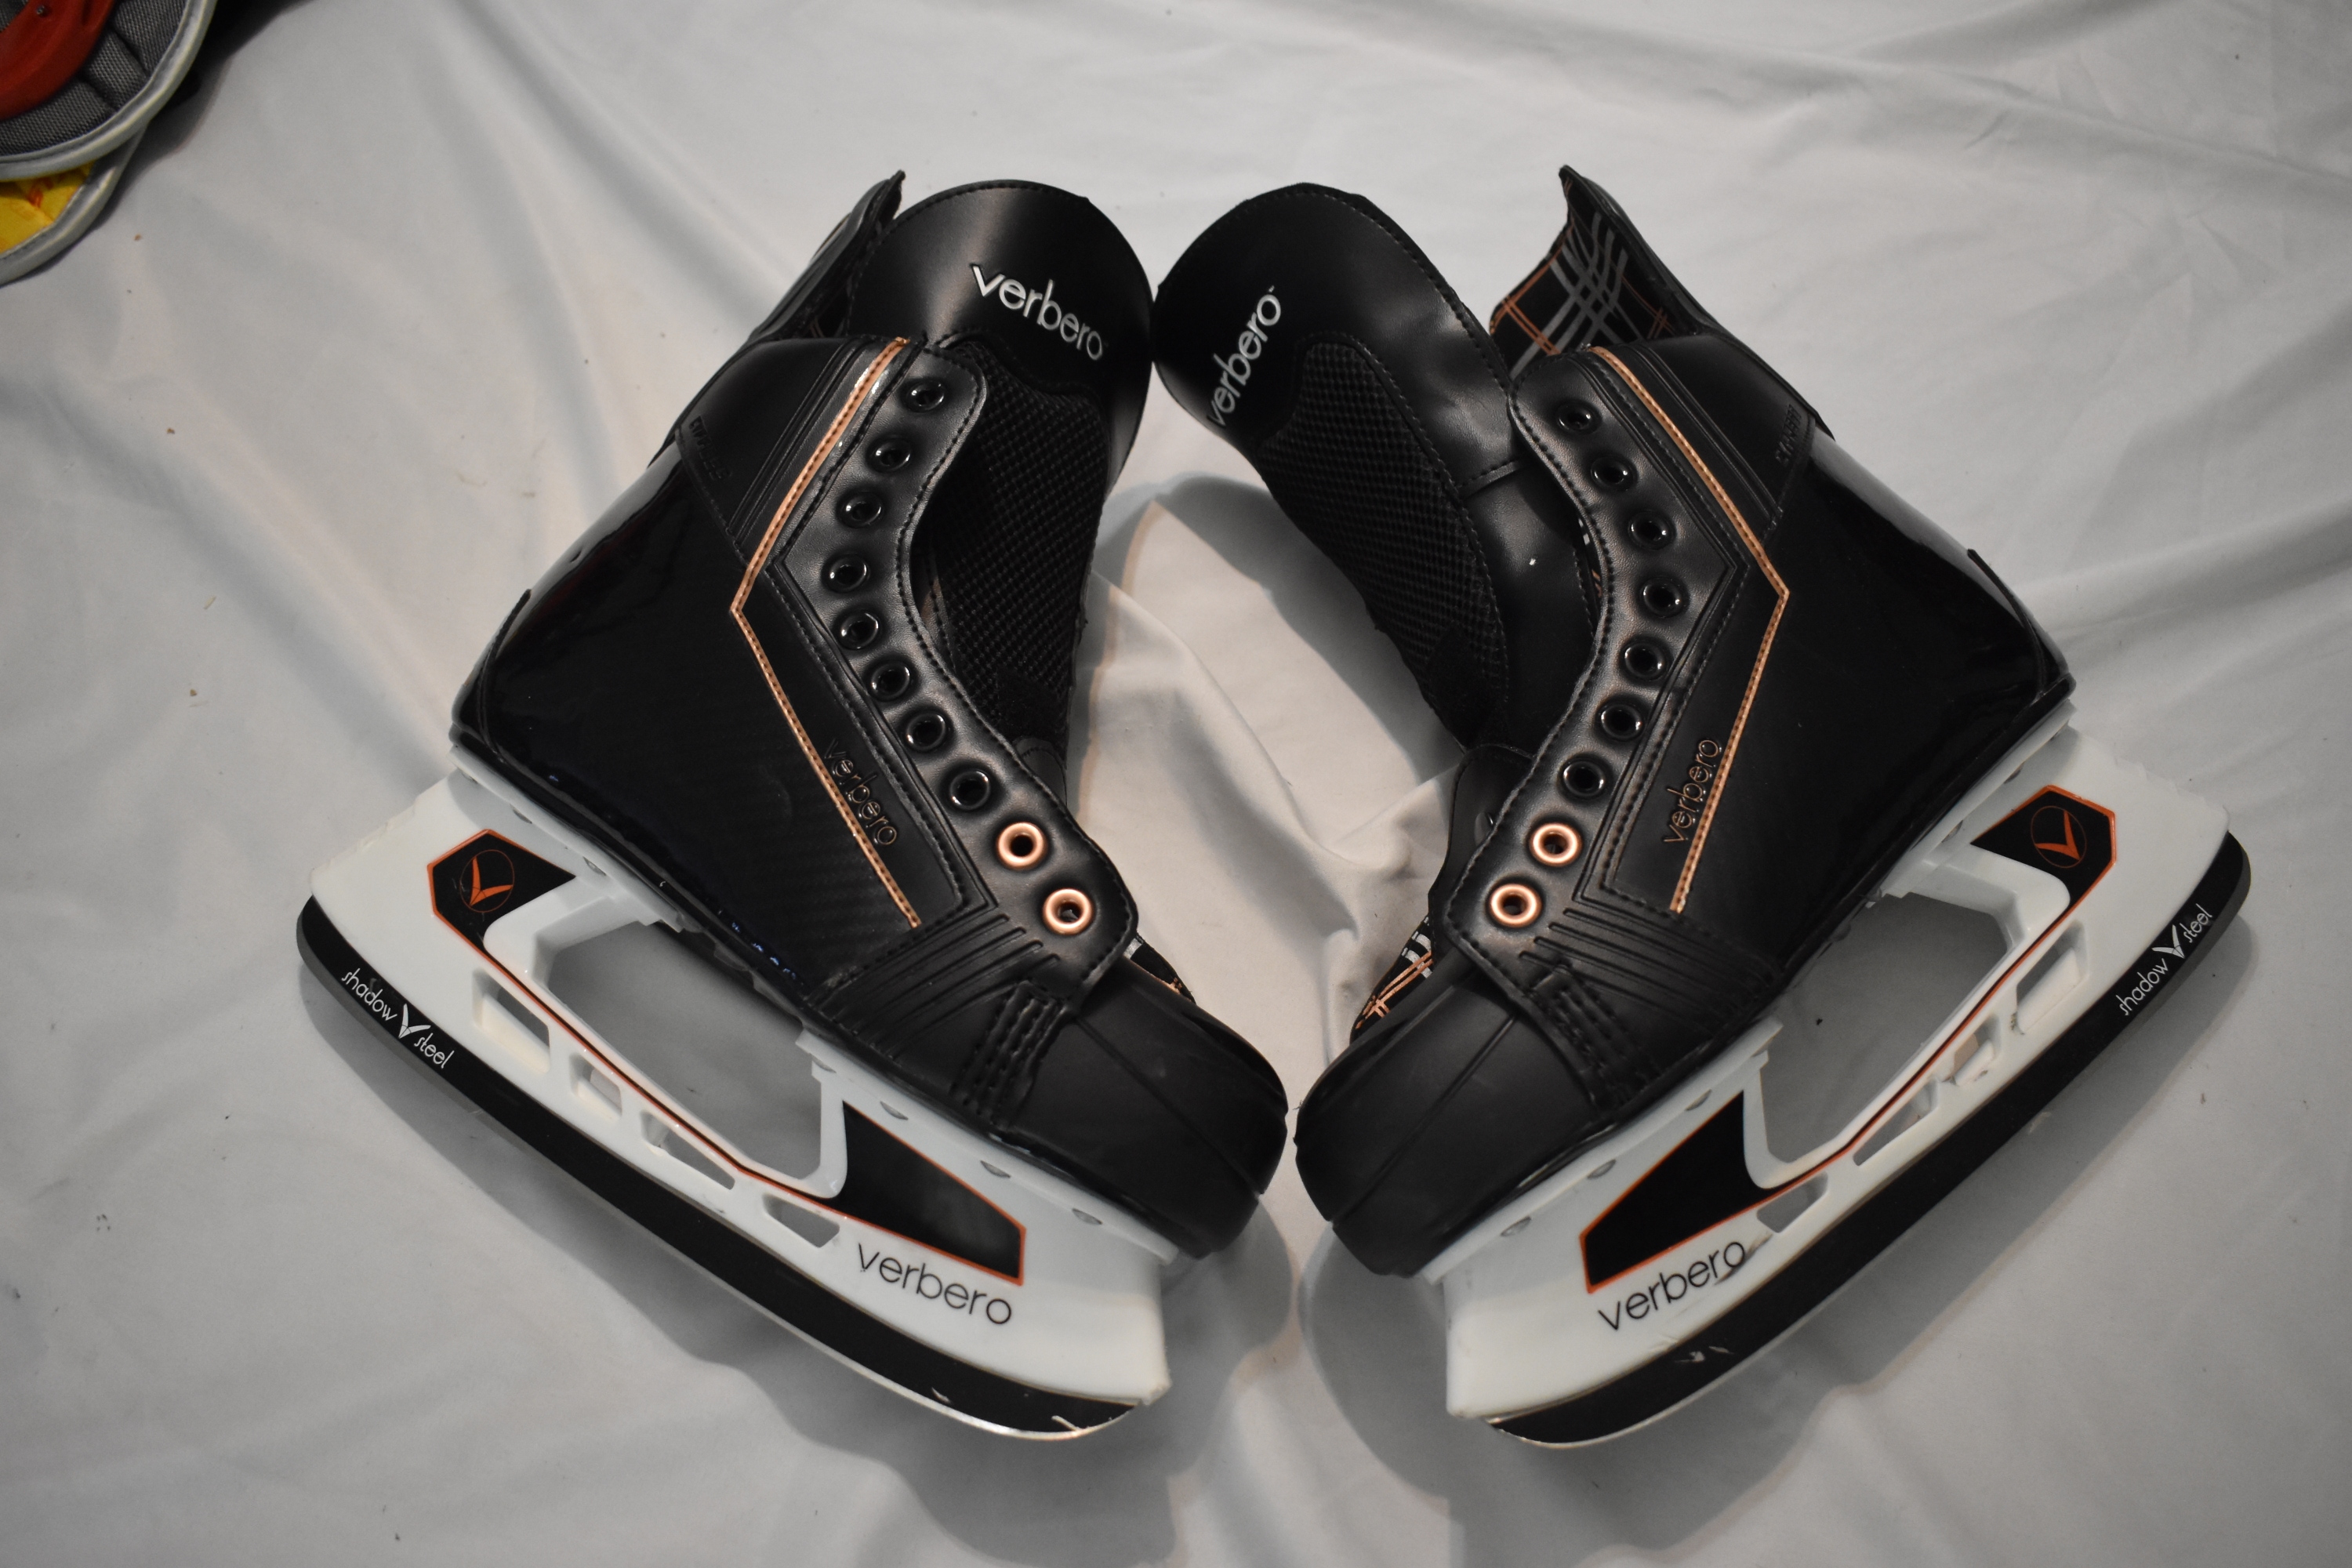 NEW - Verbero Cypress Shadow Steel Hockey Skates, Size 8D